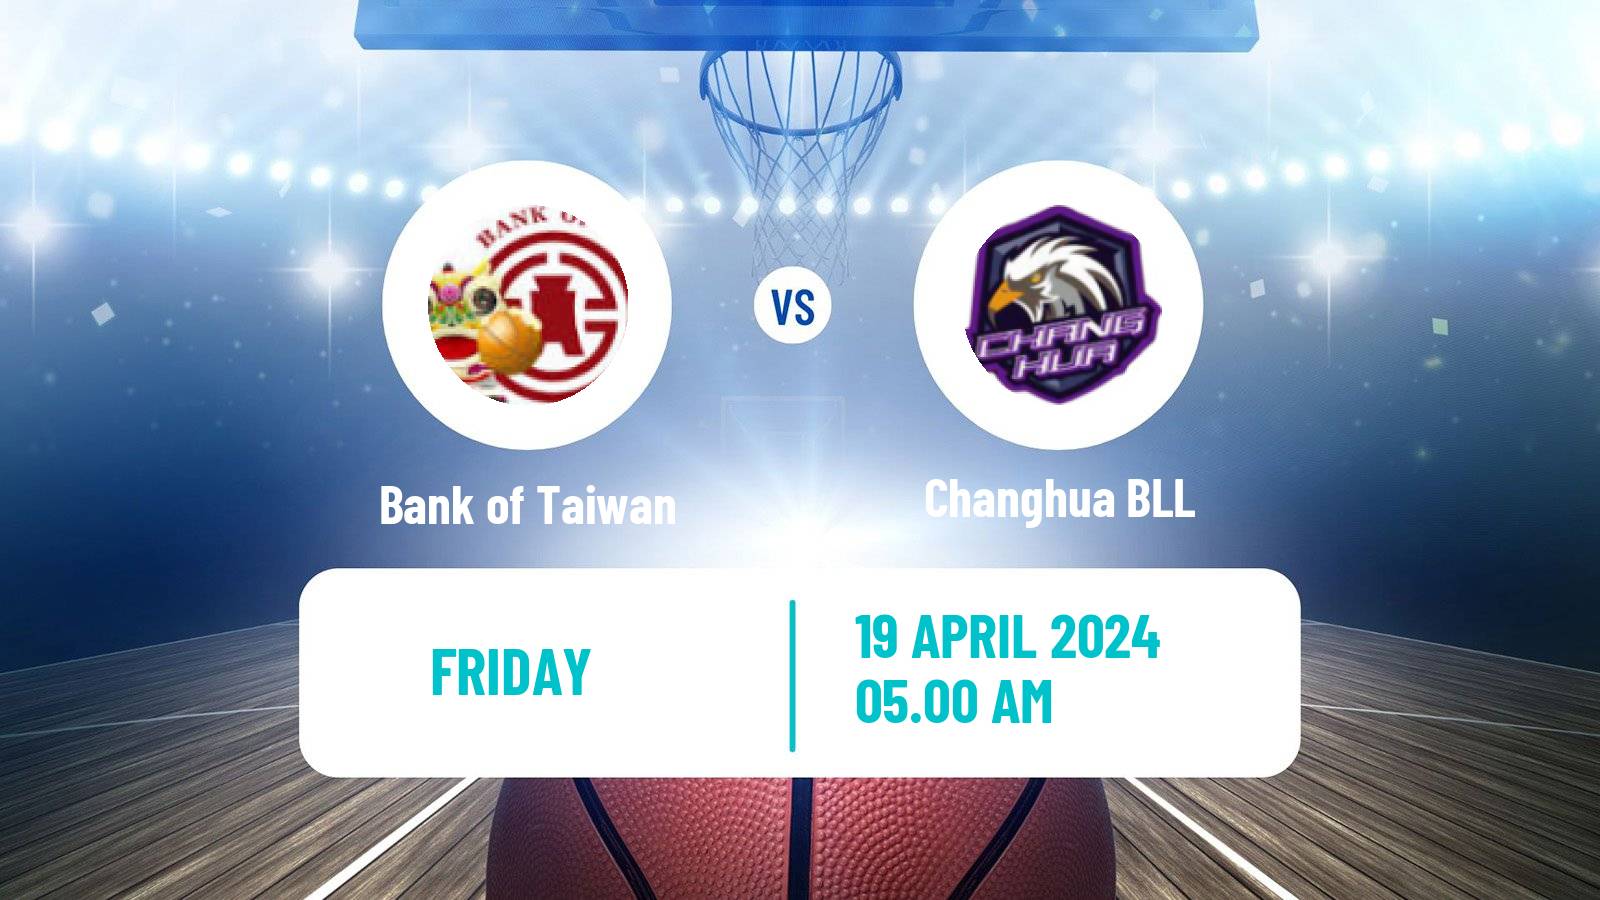 Basketball Taiwan SBL Bank of Taiwan - Changhua BLL